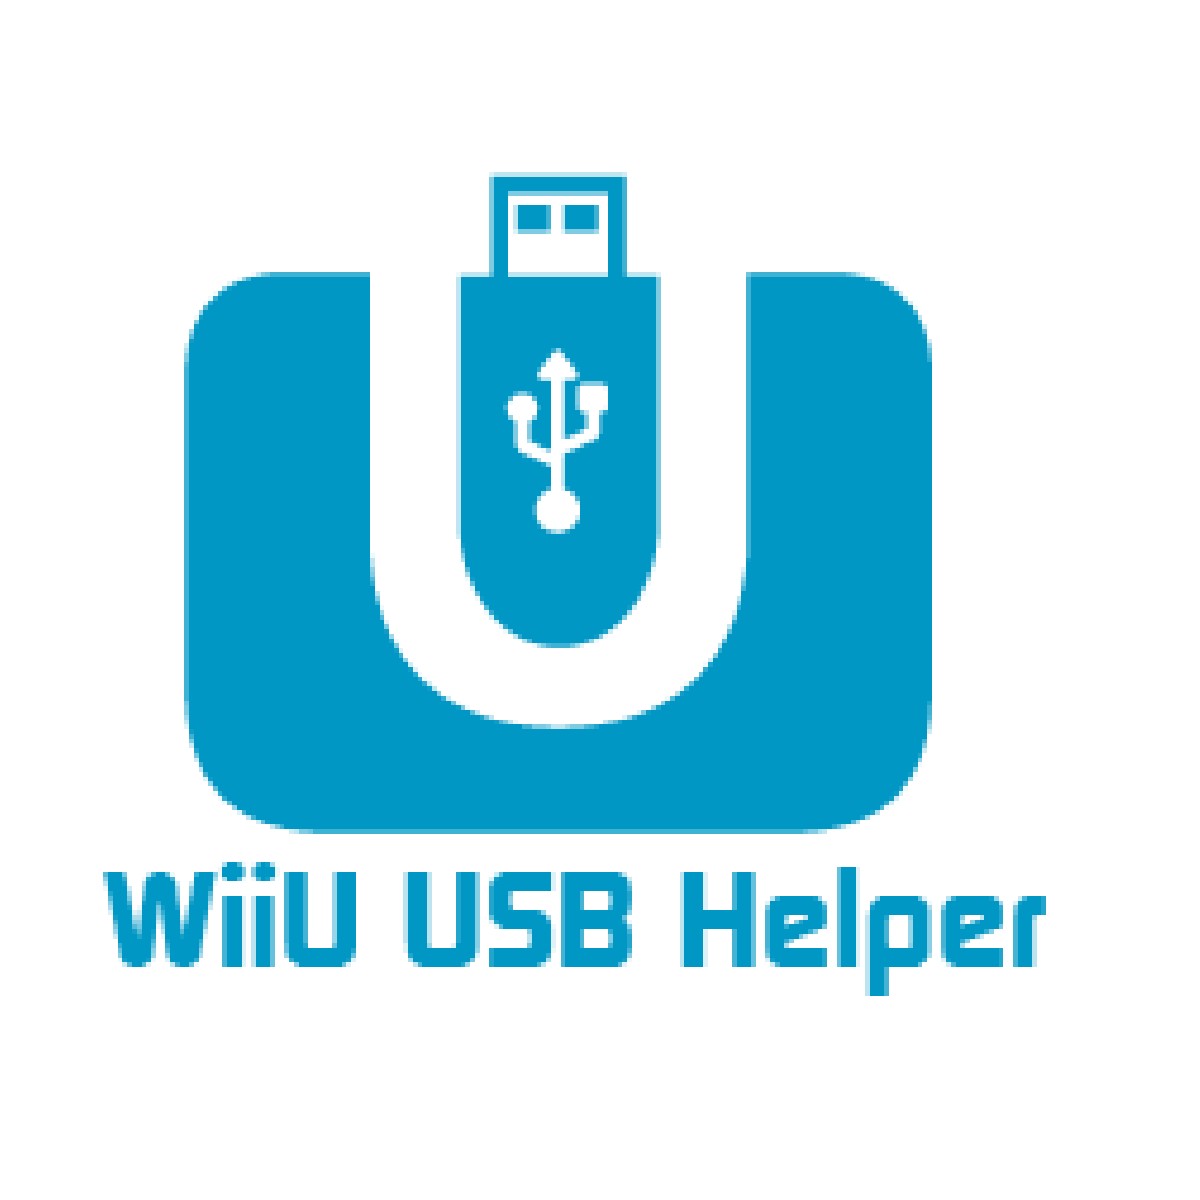 Wii U USB Helper 0.6.1.655 Free Download for Windows 10, 8 and 7